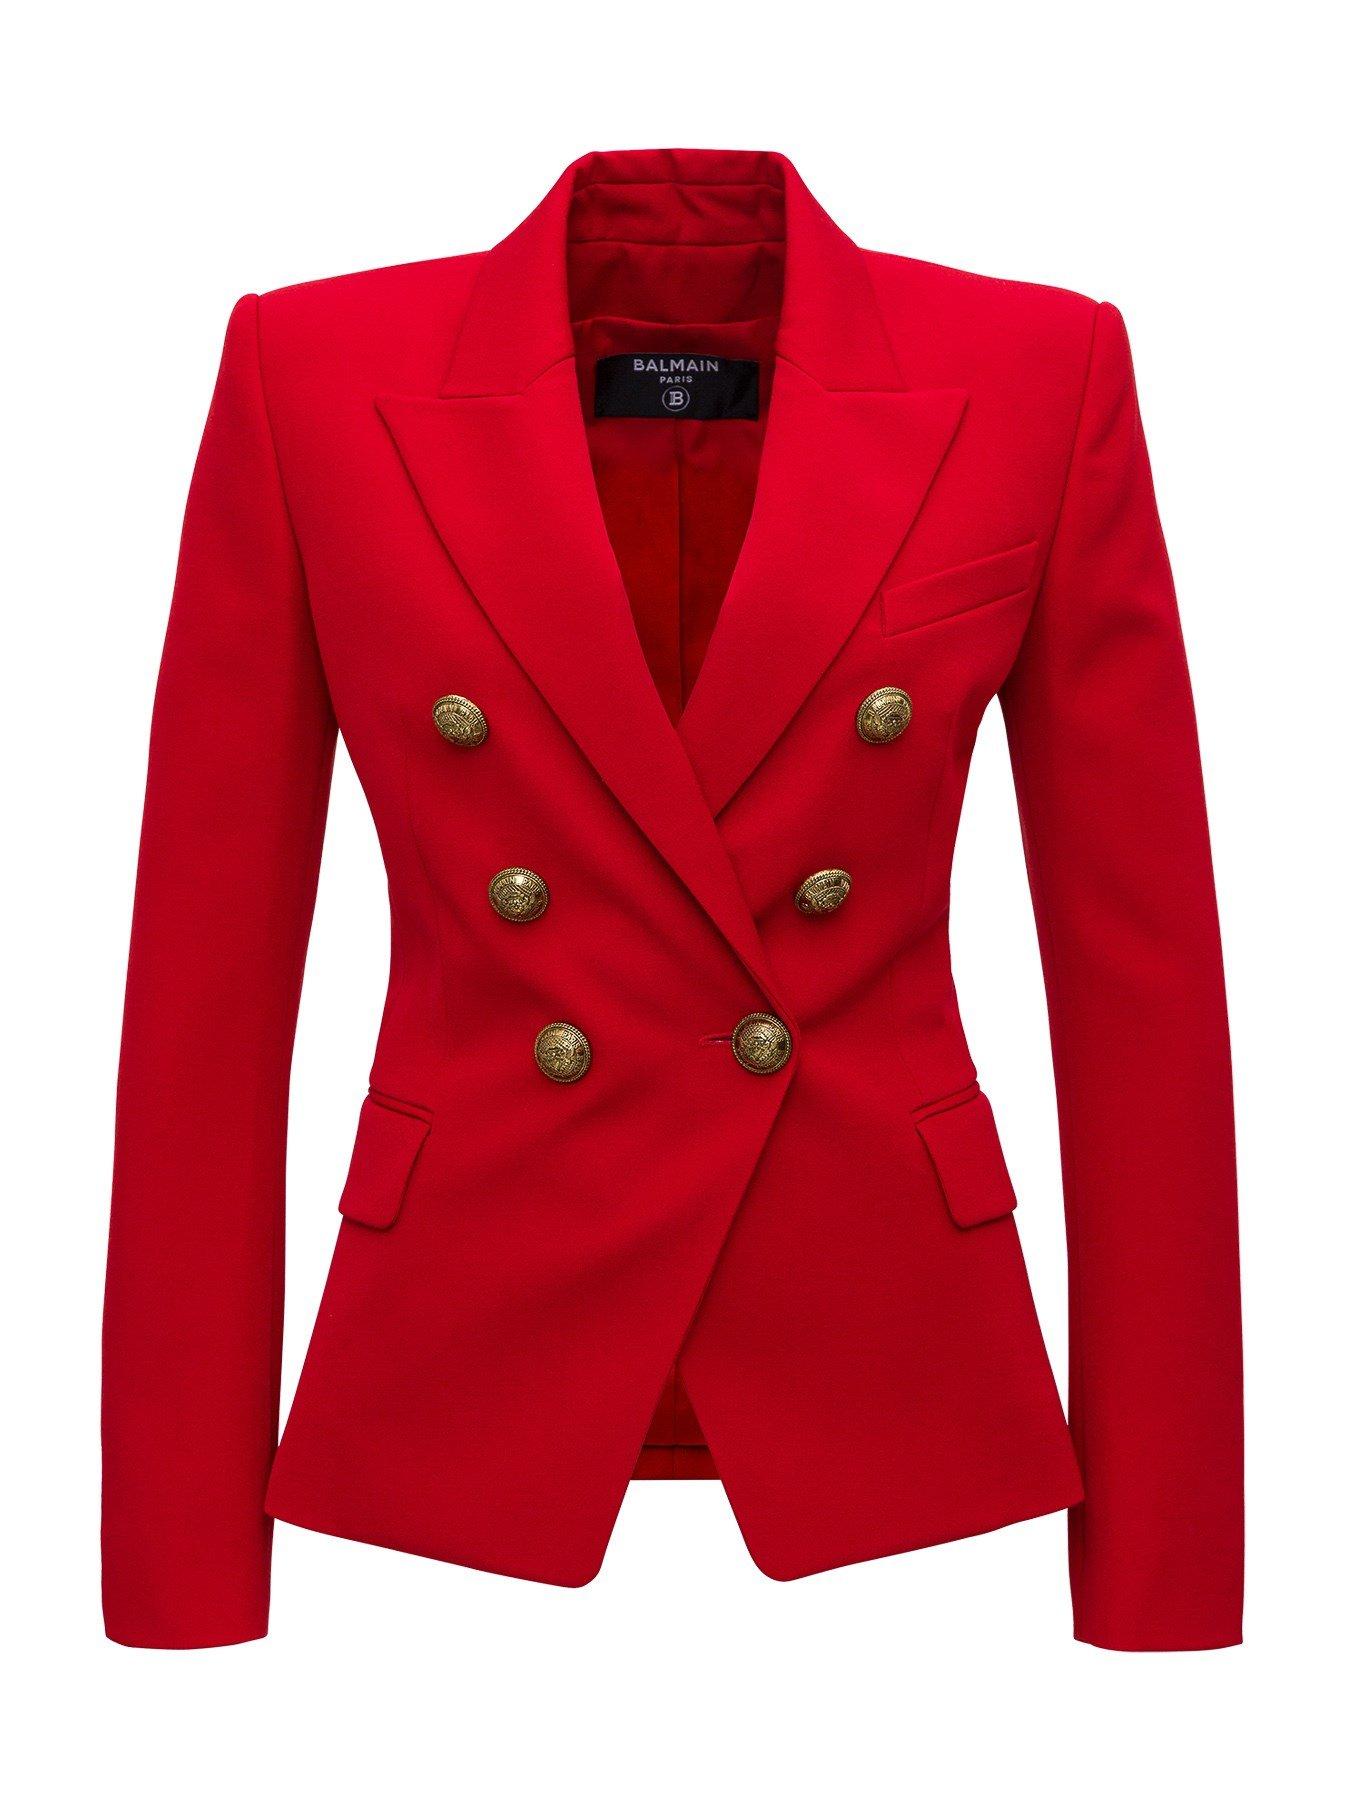 Balmain Embellished Blazer in Brick Red (Red) - Lyst